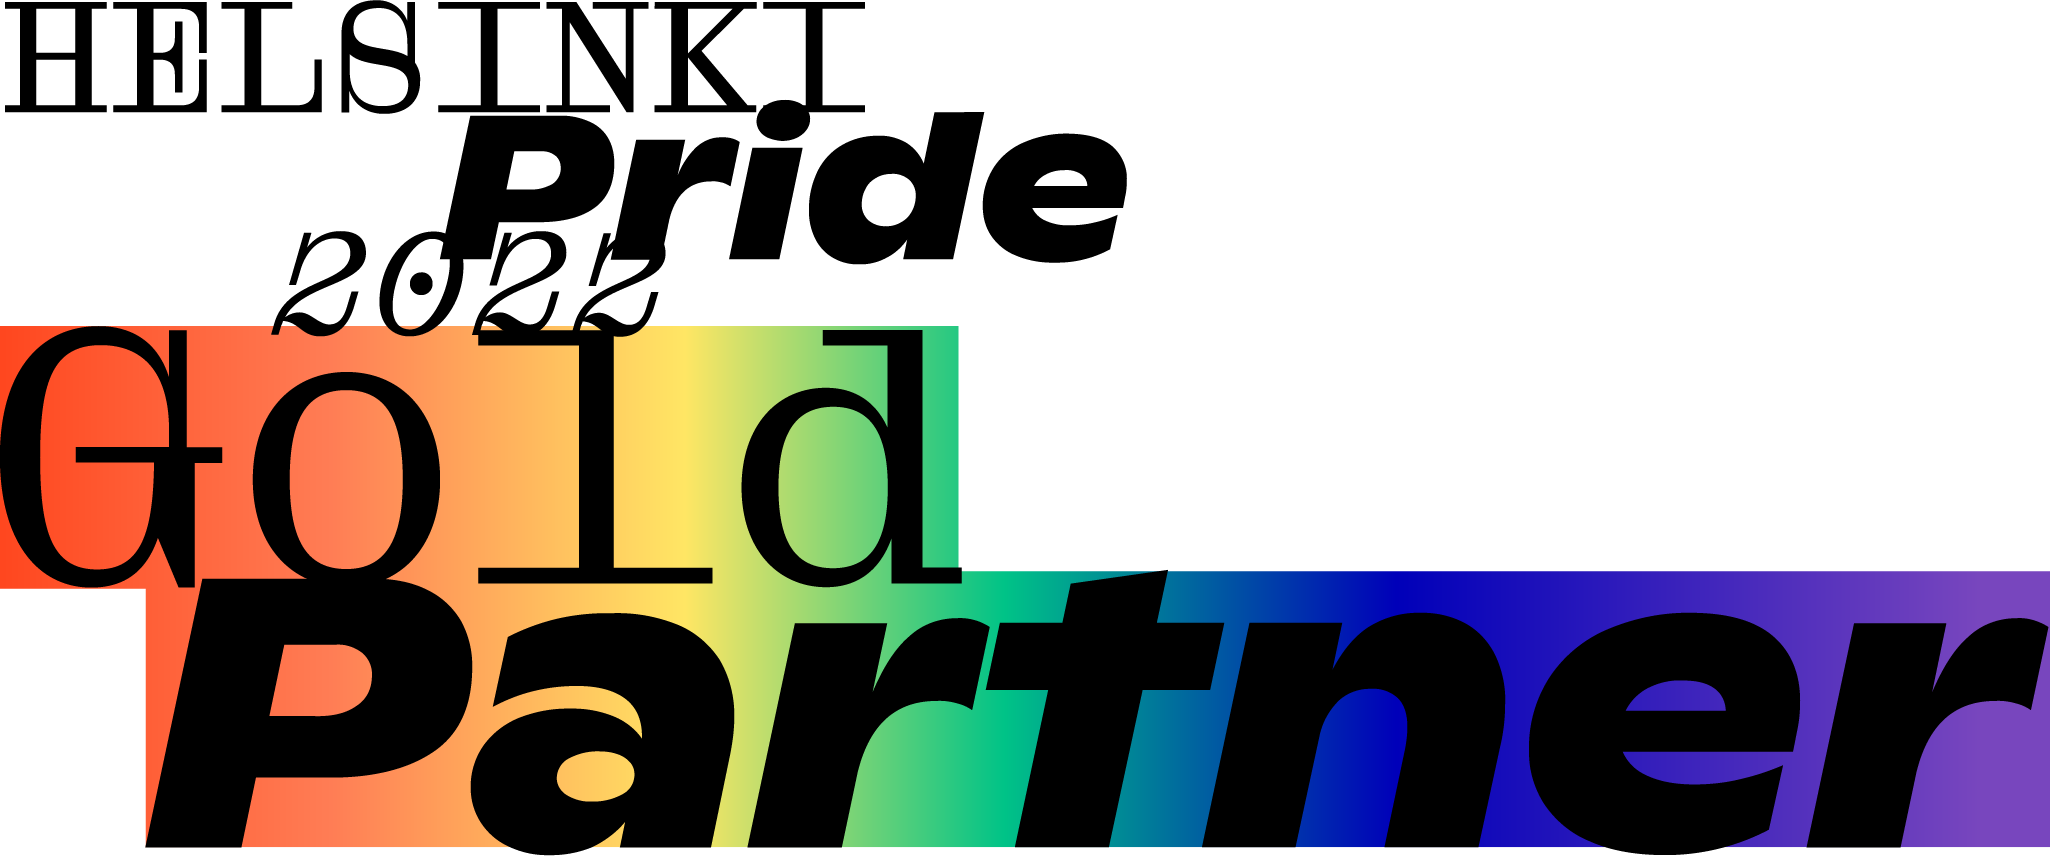 Helsinki Pride partnership logo